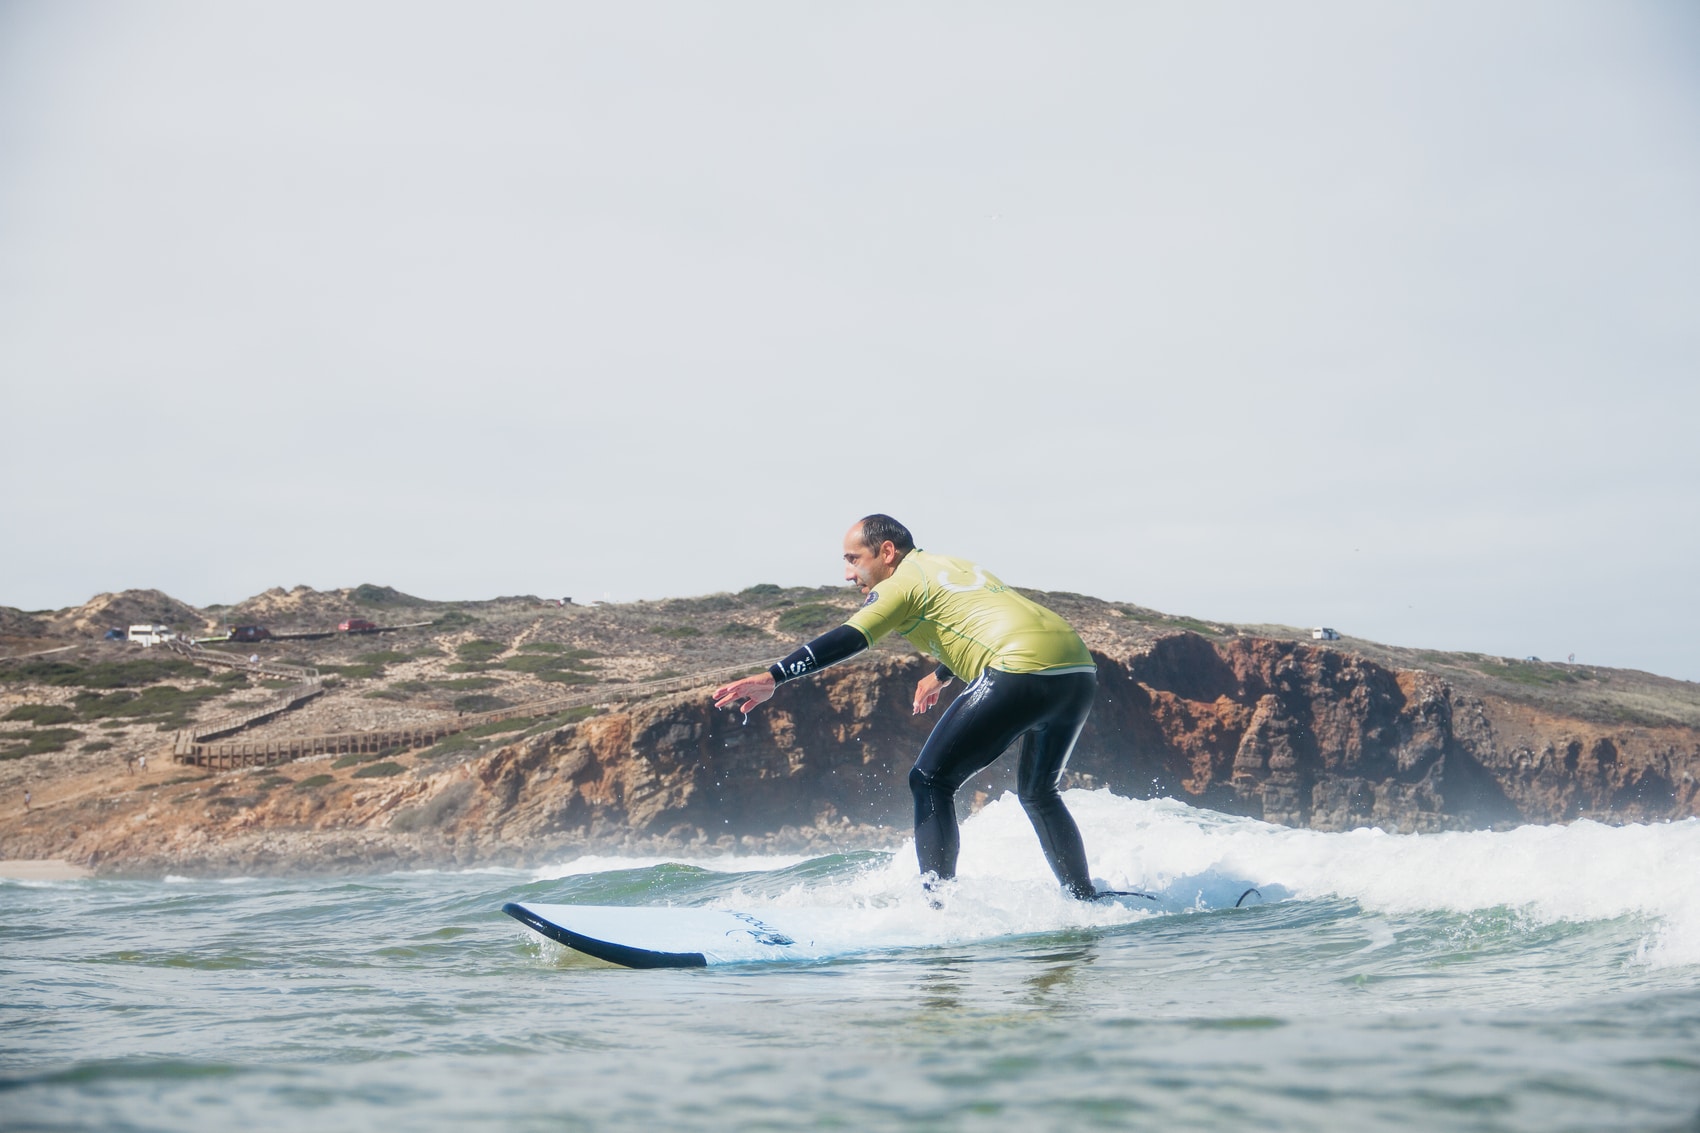 1,2,3,4…sensations of those who surf